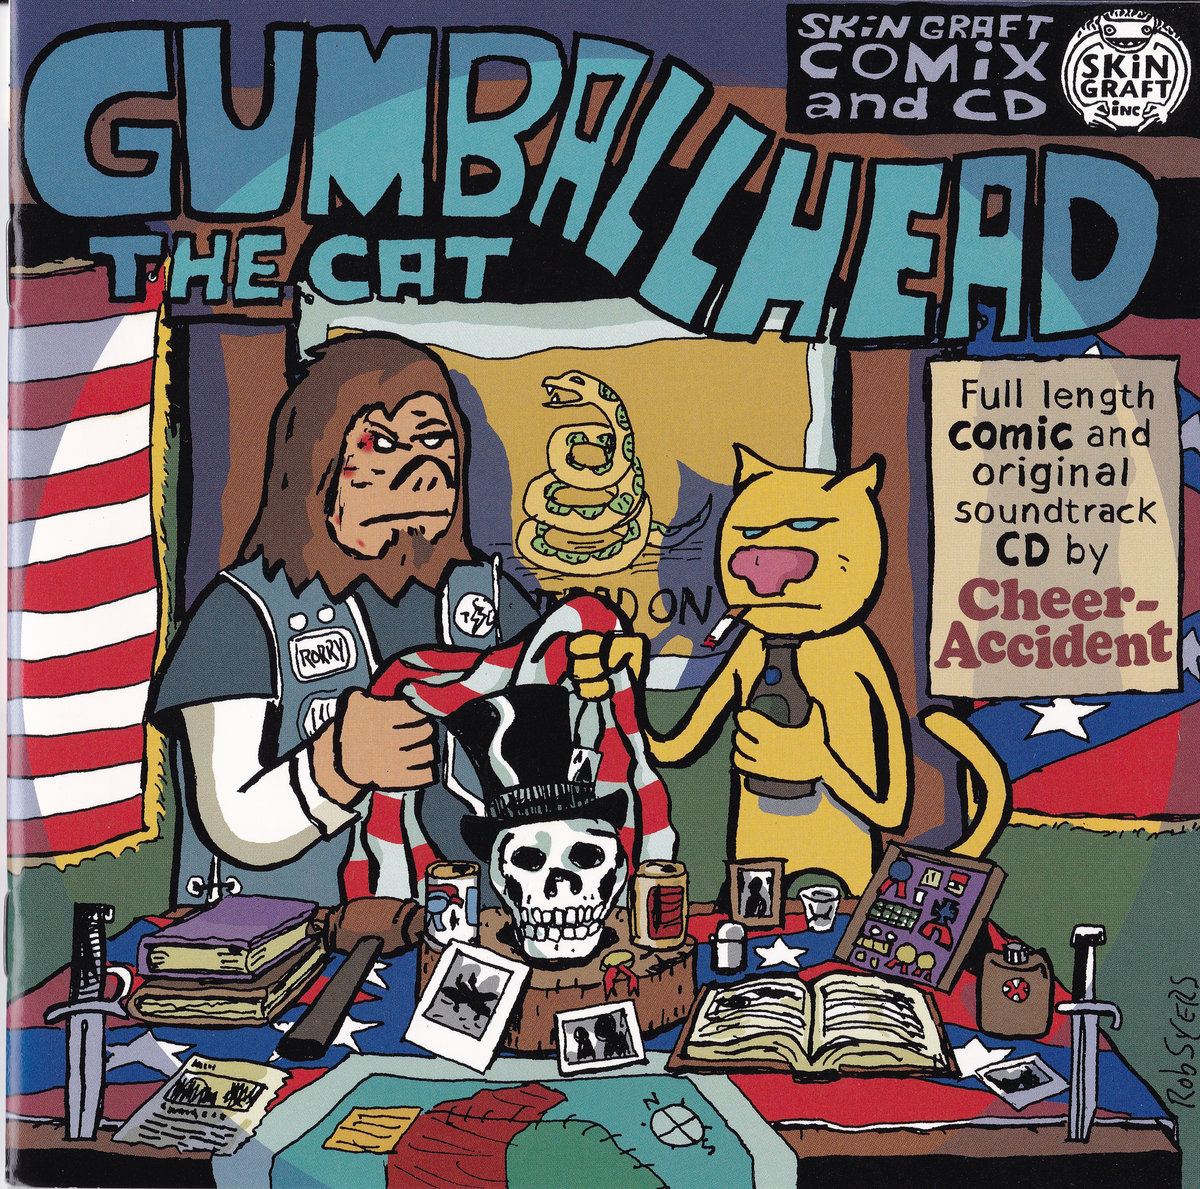 Gumballhead The Cat (2003, Digital Download)